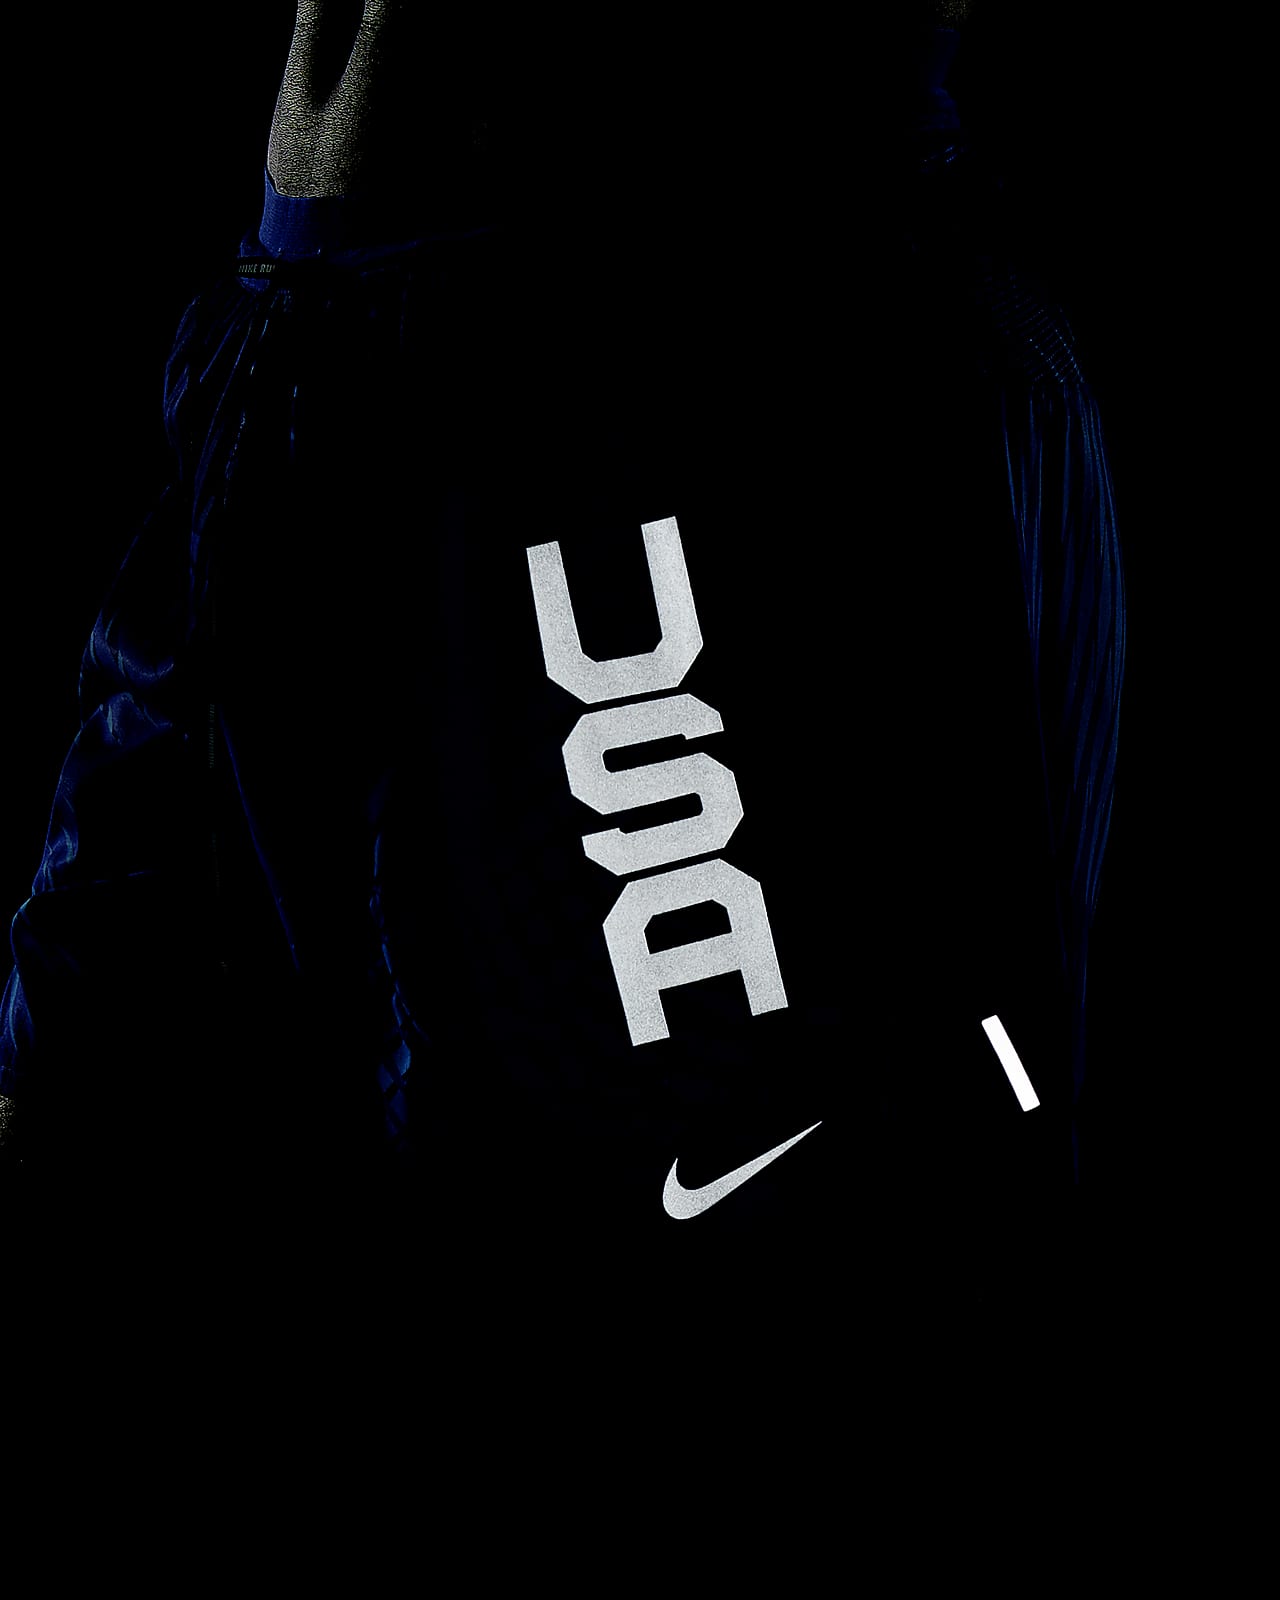 Nike Team USA Flex Stride Men's Running Shorts. Nike.com